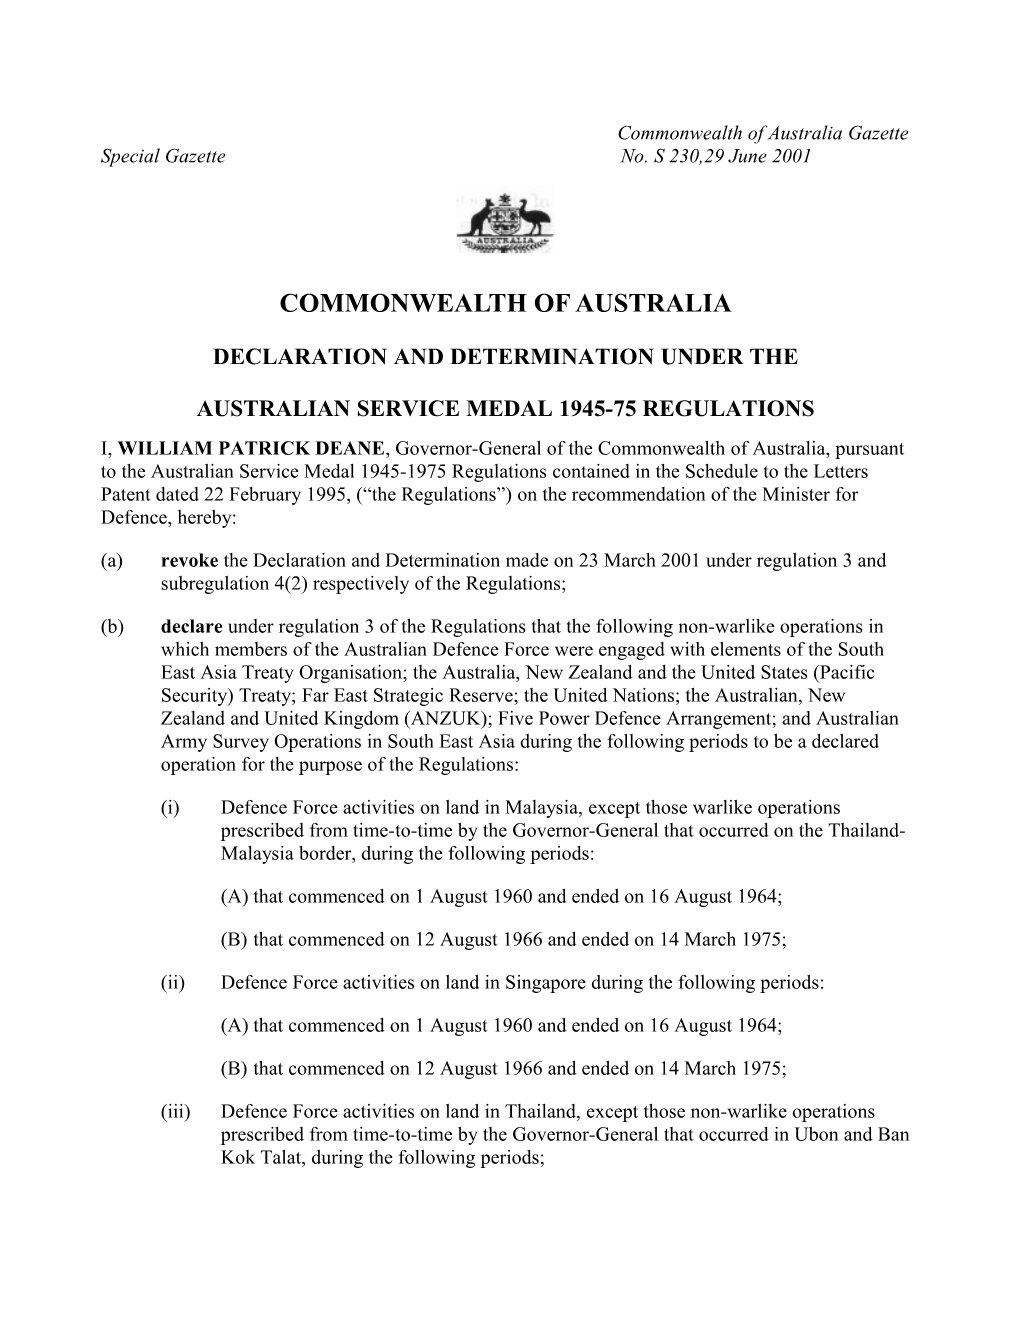 Australian Service Medal 1945-75 Regulations